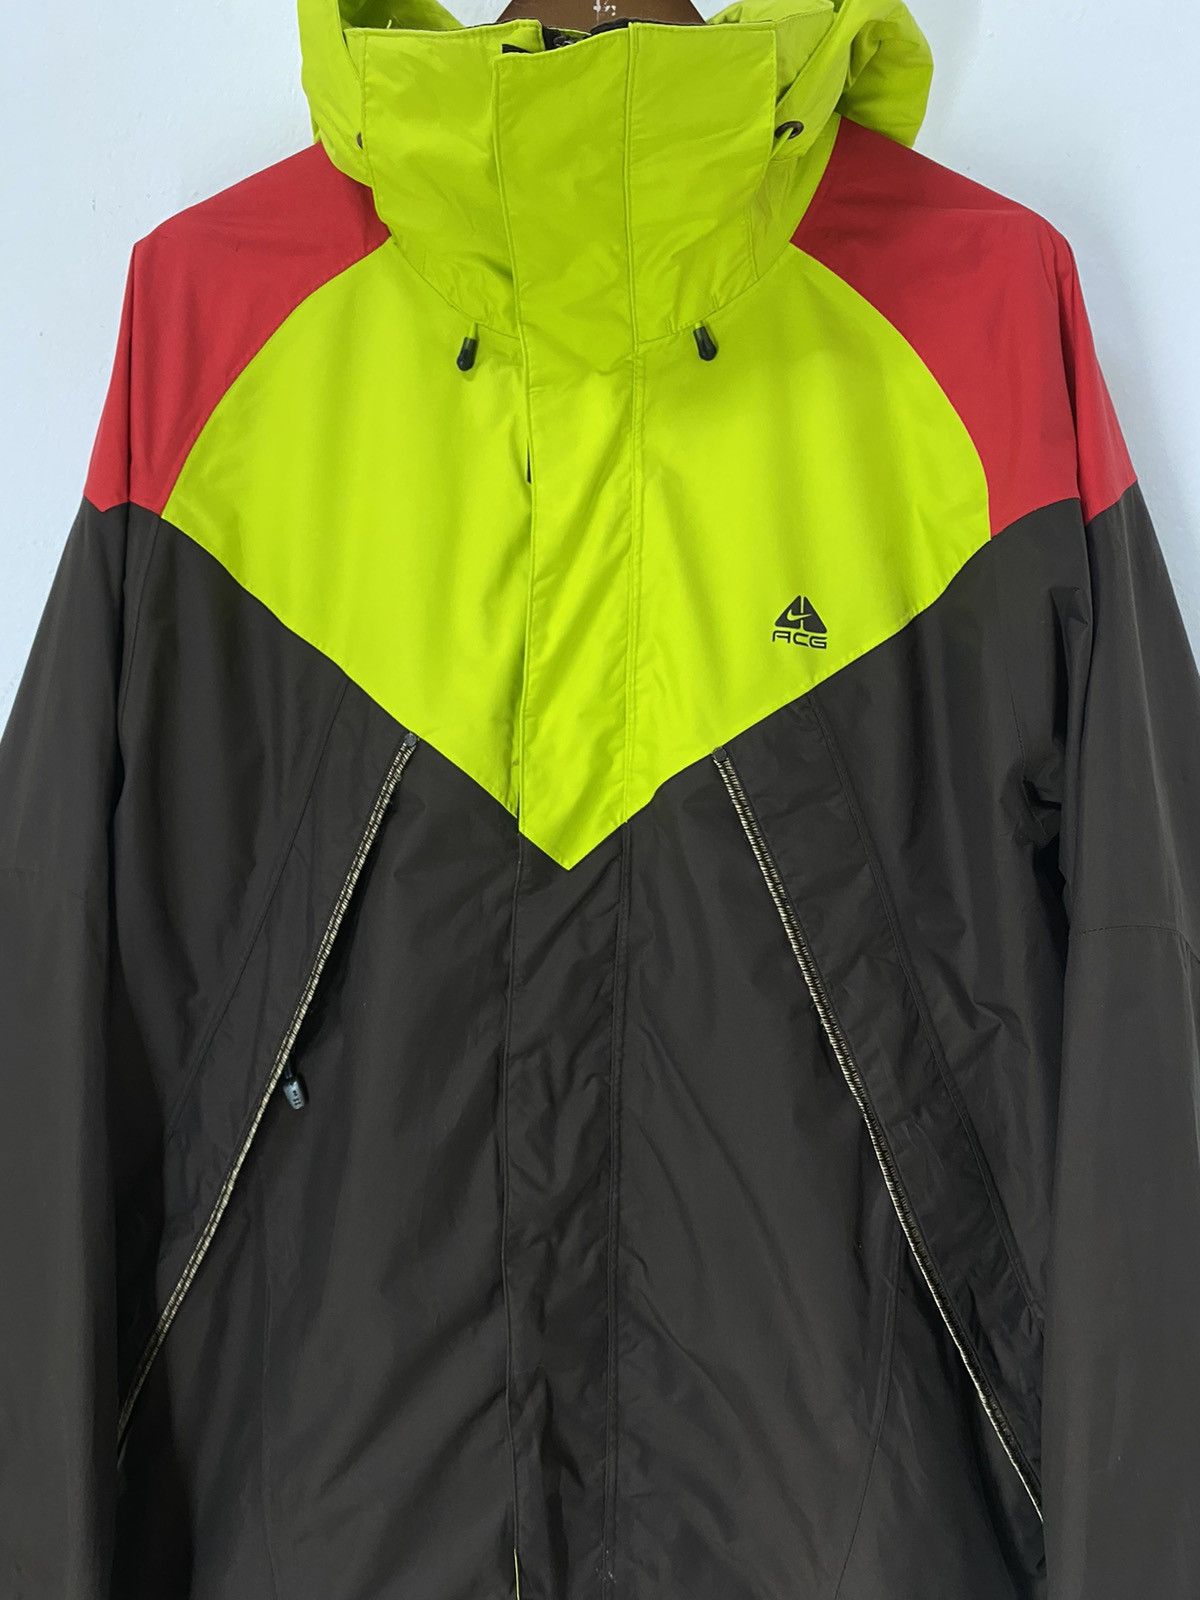 Nike ACG Windbreaker Jacket multicoloured Jacket Design - 4